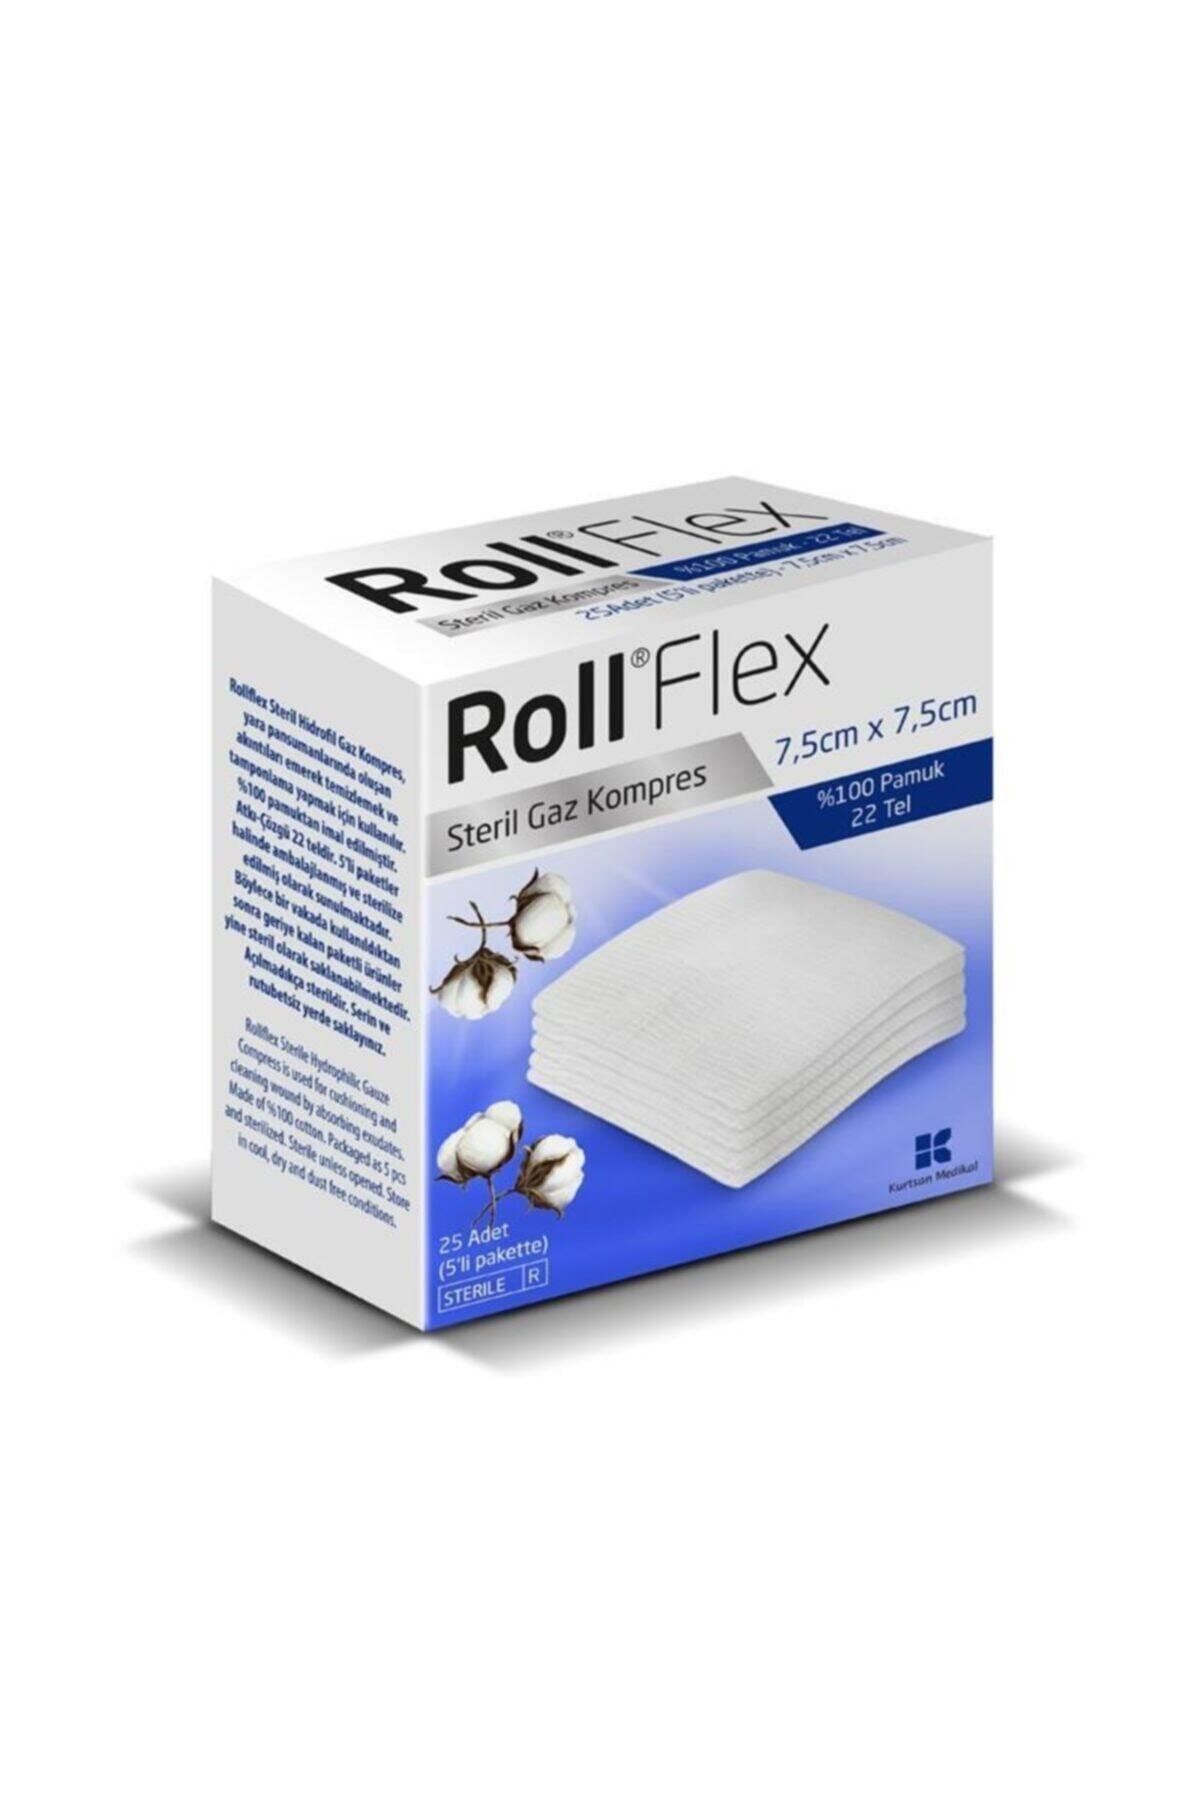 Roll Flex 7.5cmx7.5cm Steril Gaz Kompres Spanç 25li Paket